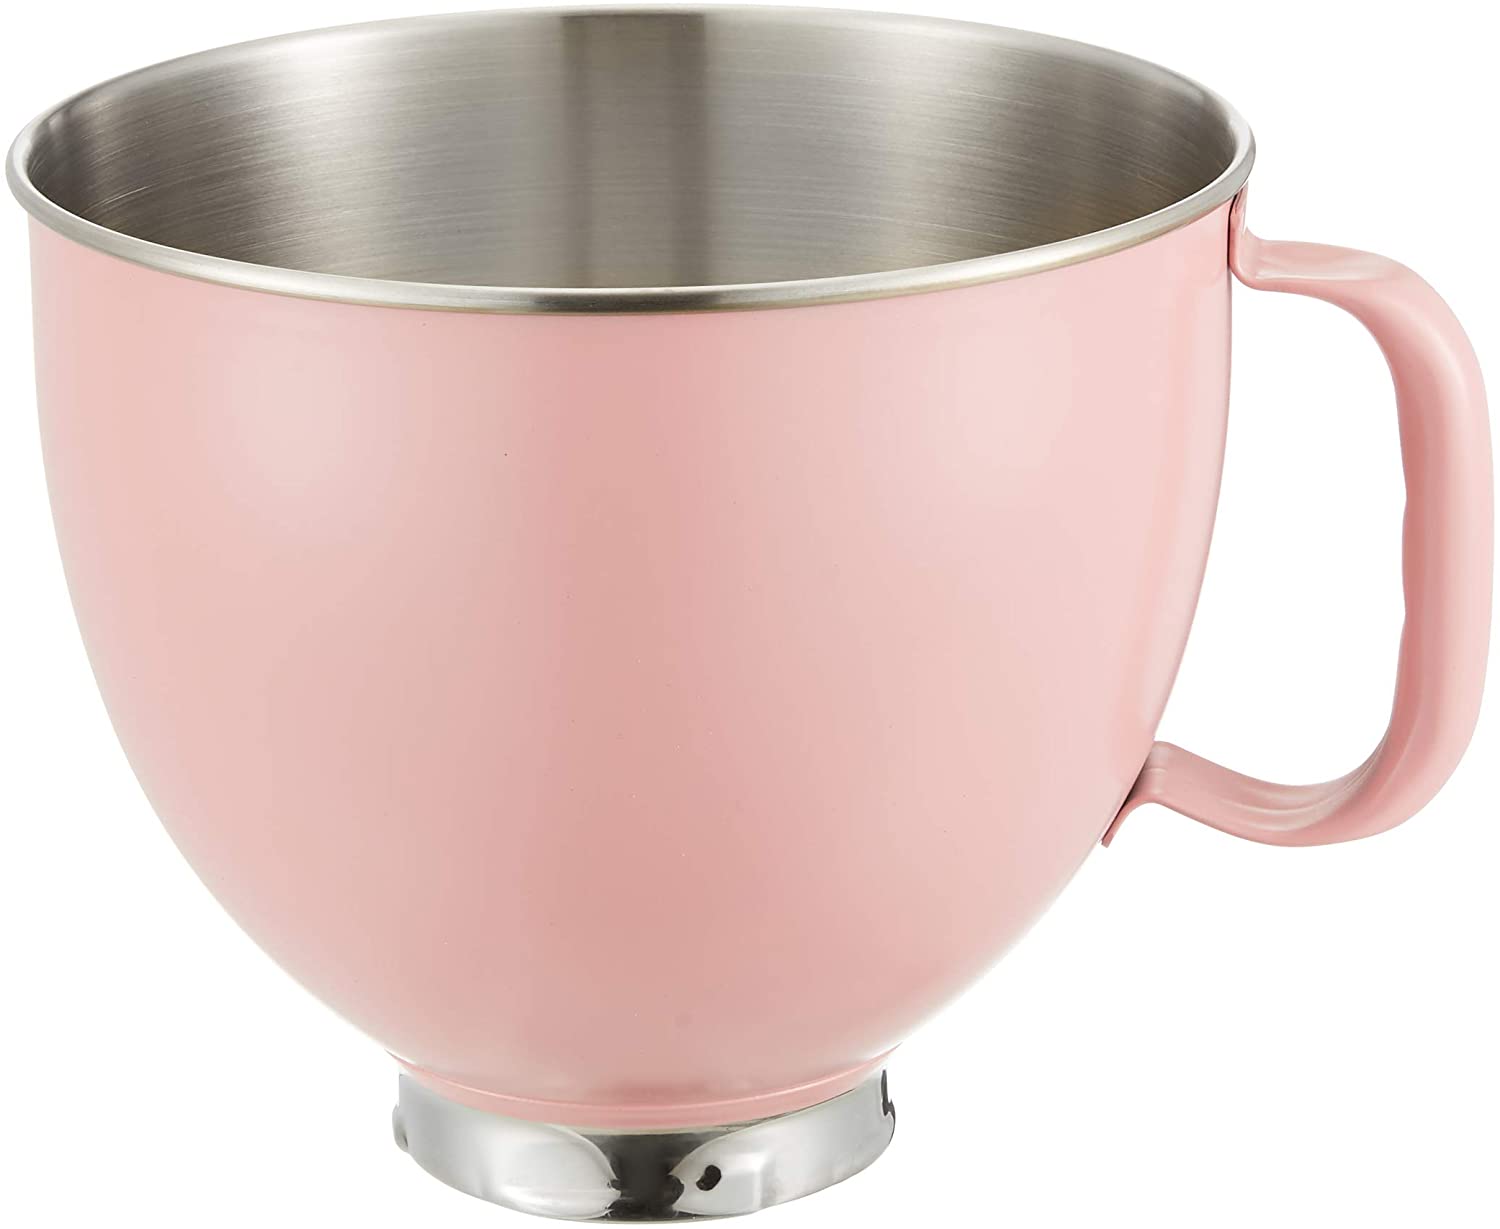 Kitchenaid 5KSM5SSBDR Stainless Steel Bowl, Pink